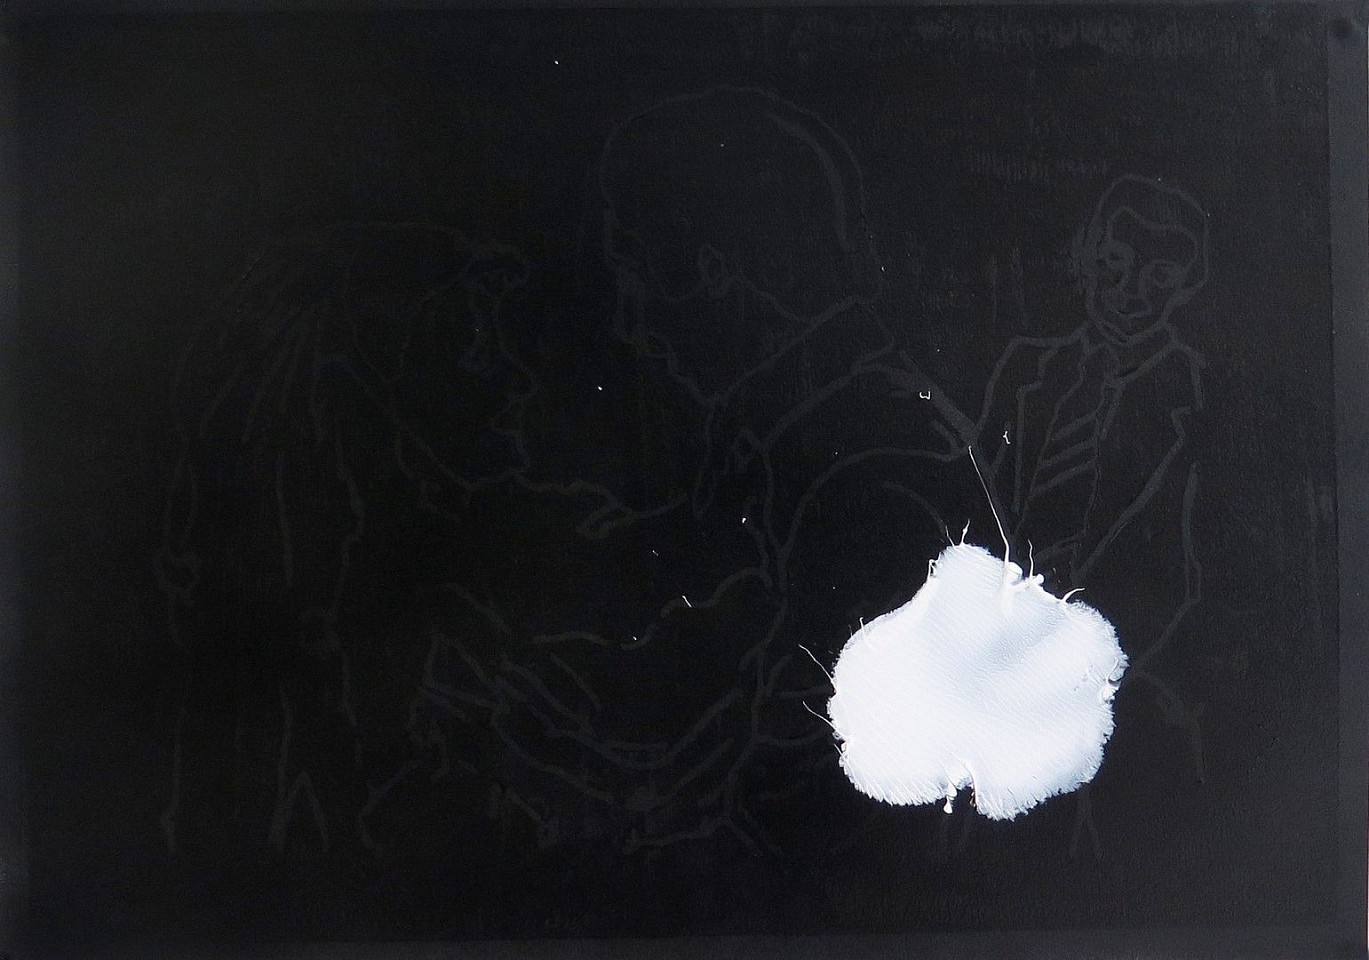 Elham Rokni, Full Paint Eclipse
2015, Monoprint, acrylic and spray paint on paper